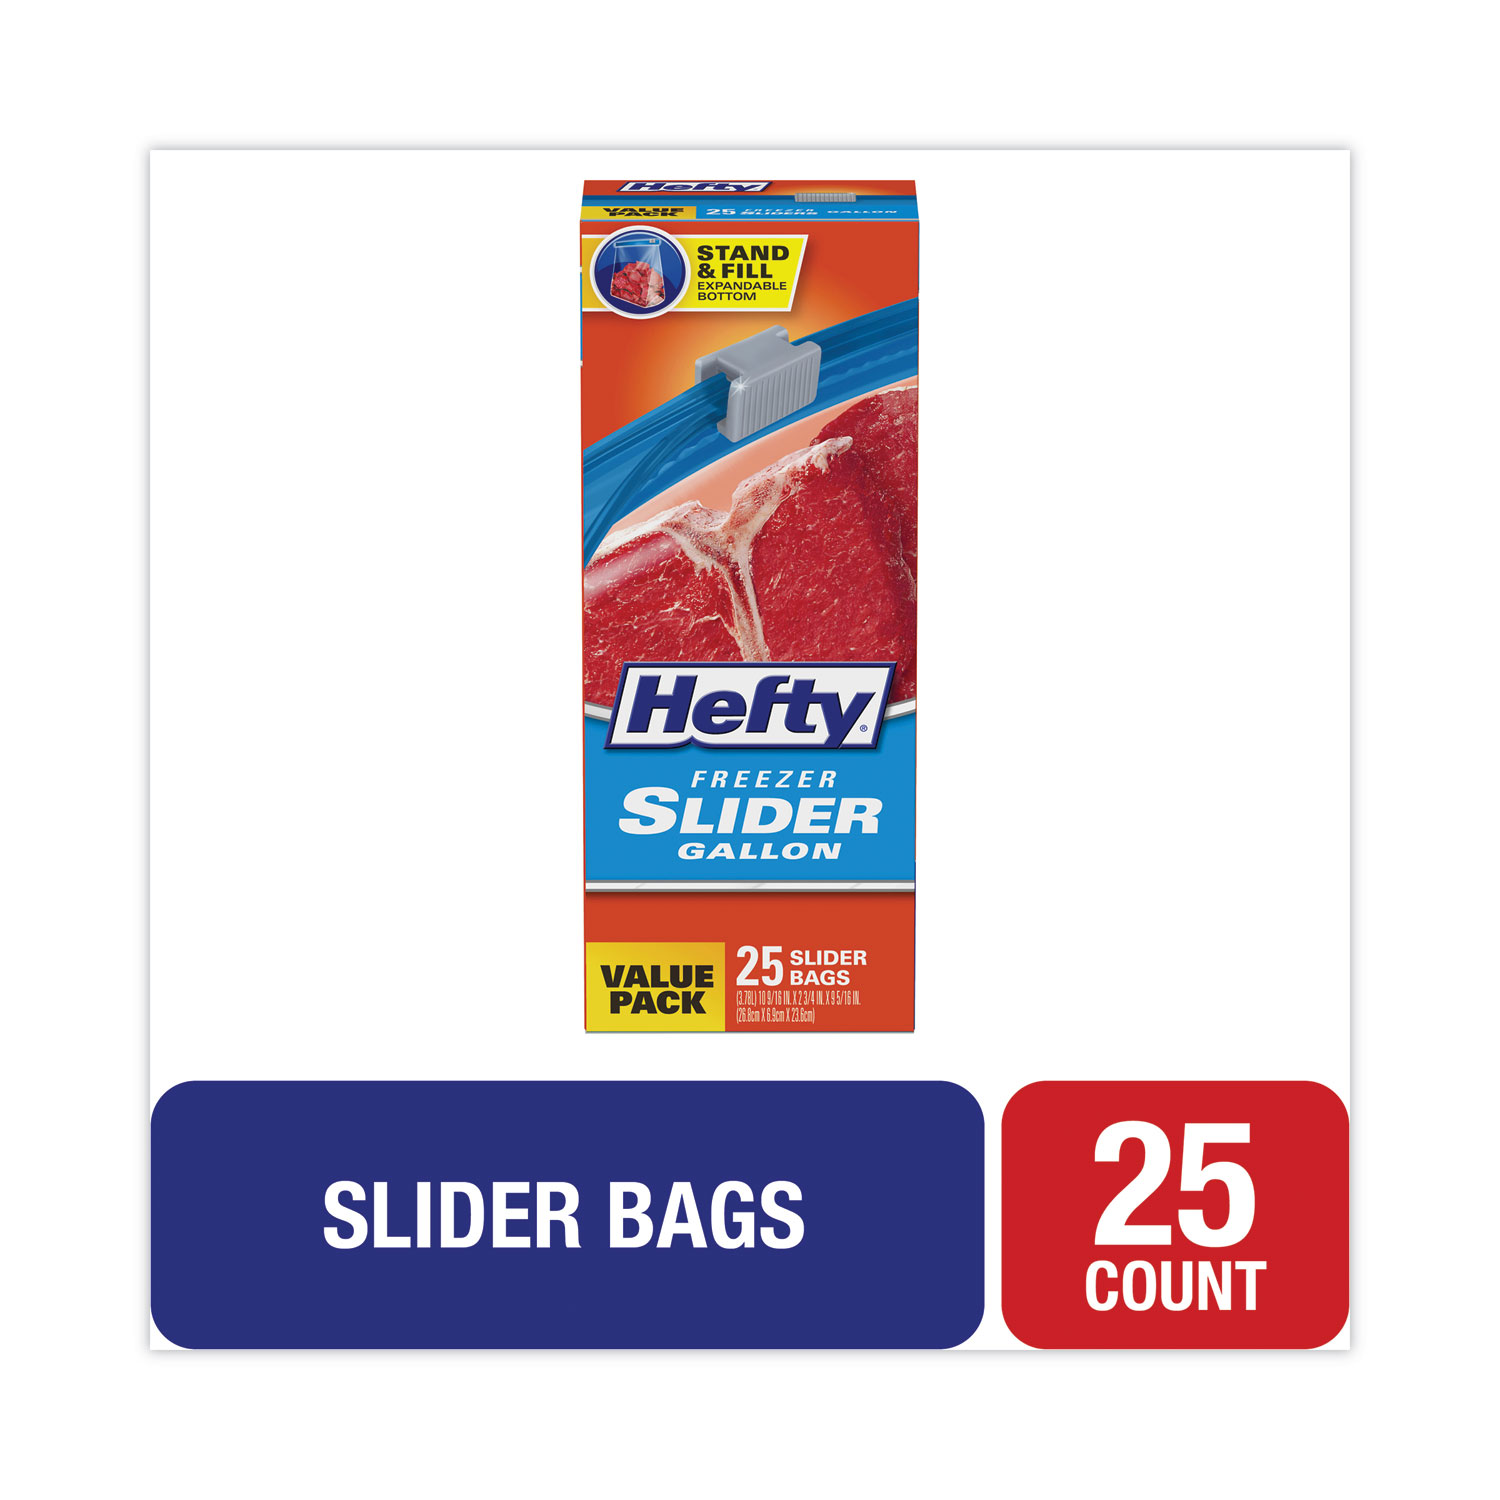 Save on Hefty Slider Gallon Freezer Bags Order Online Delivery